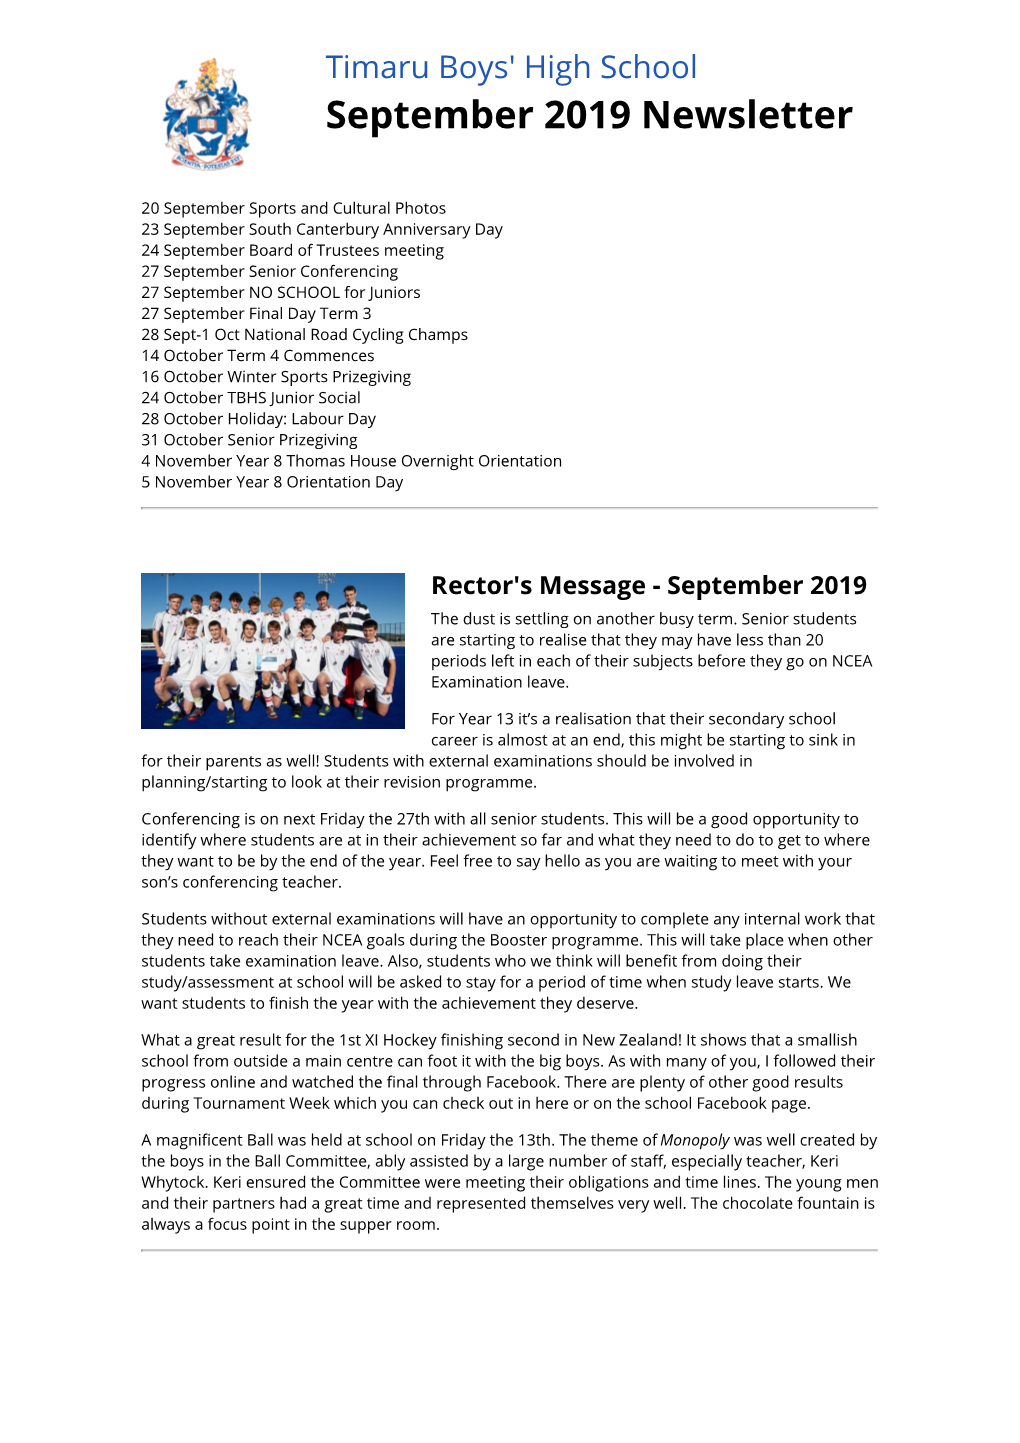 September 2019 Newsletter by Timaru Boys' High School